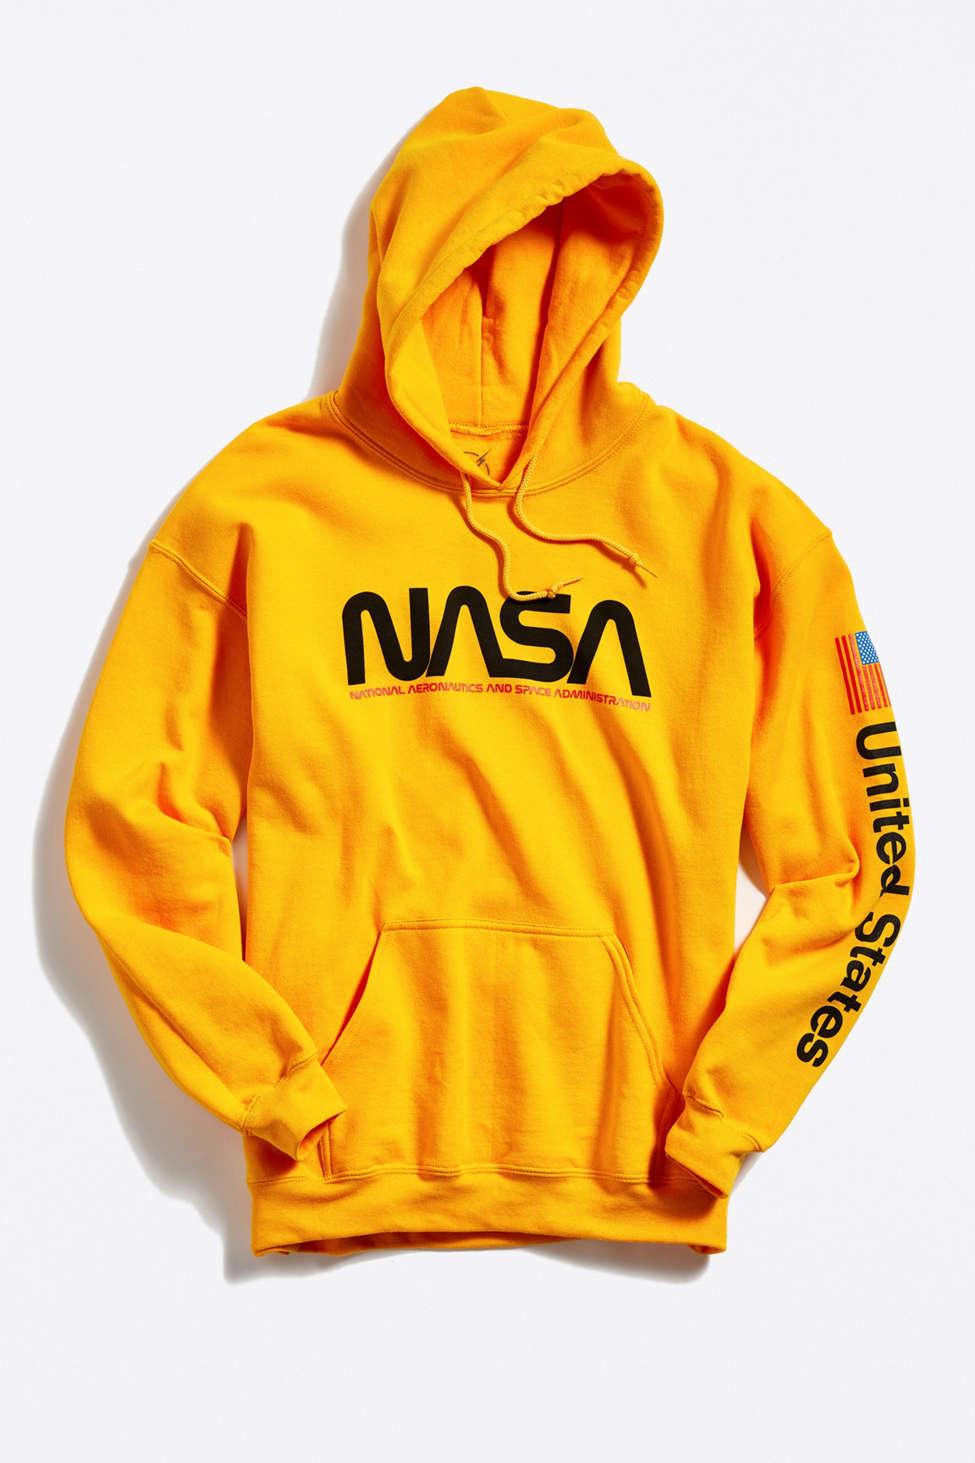 Urban Outfitters Nasa Hoodie Sweatshirt in Yellow for Men - Lyst